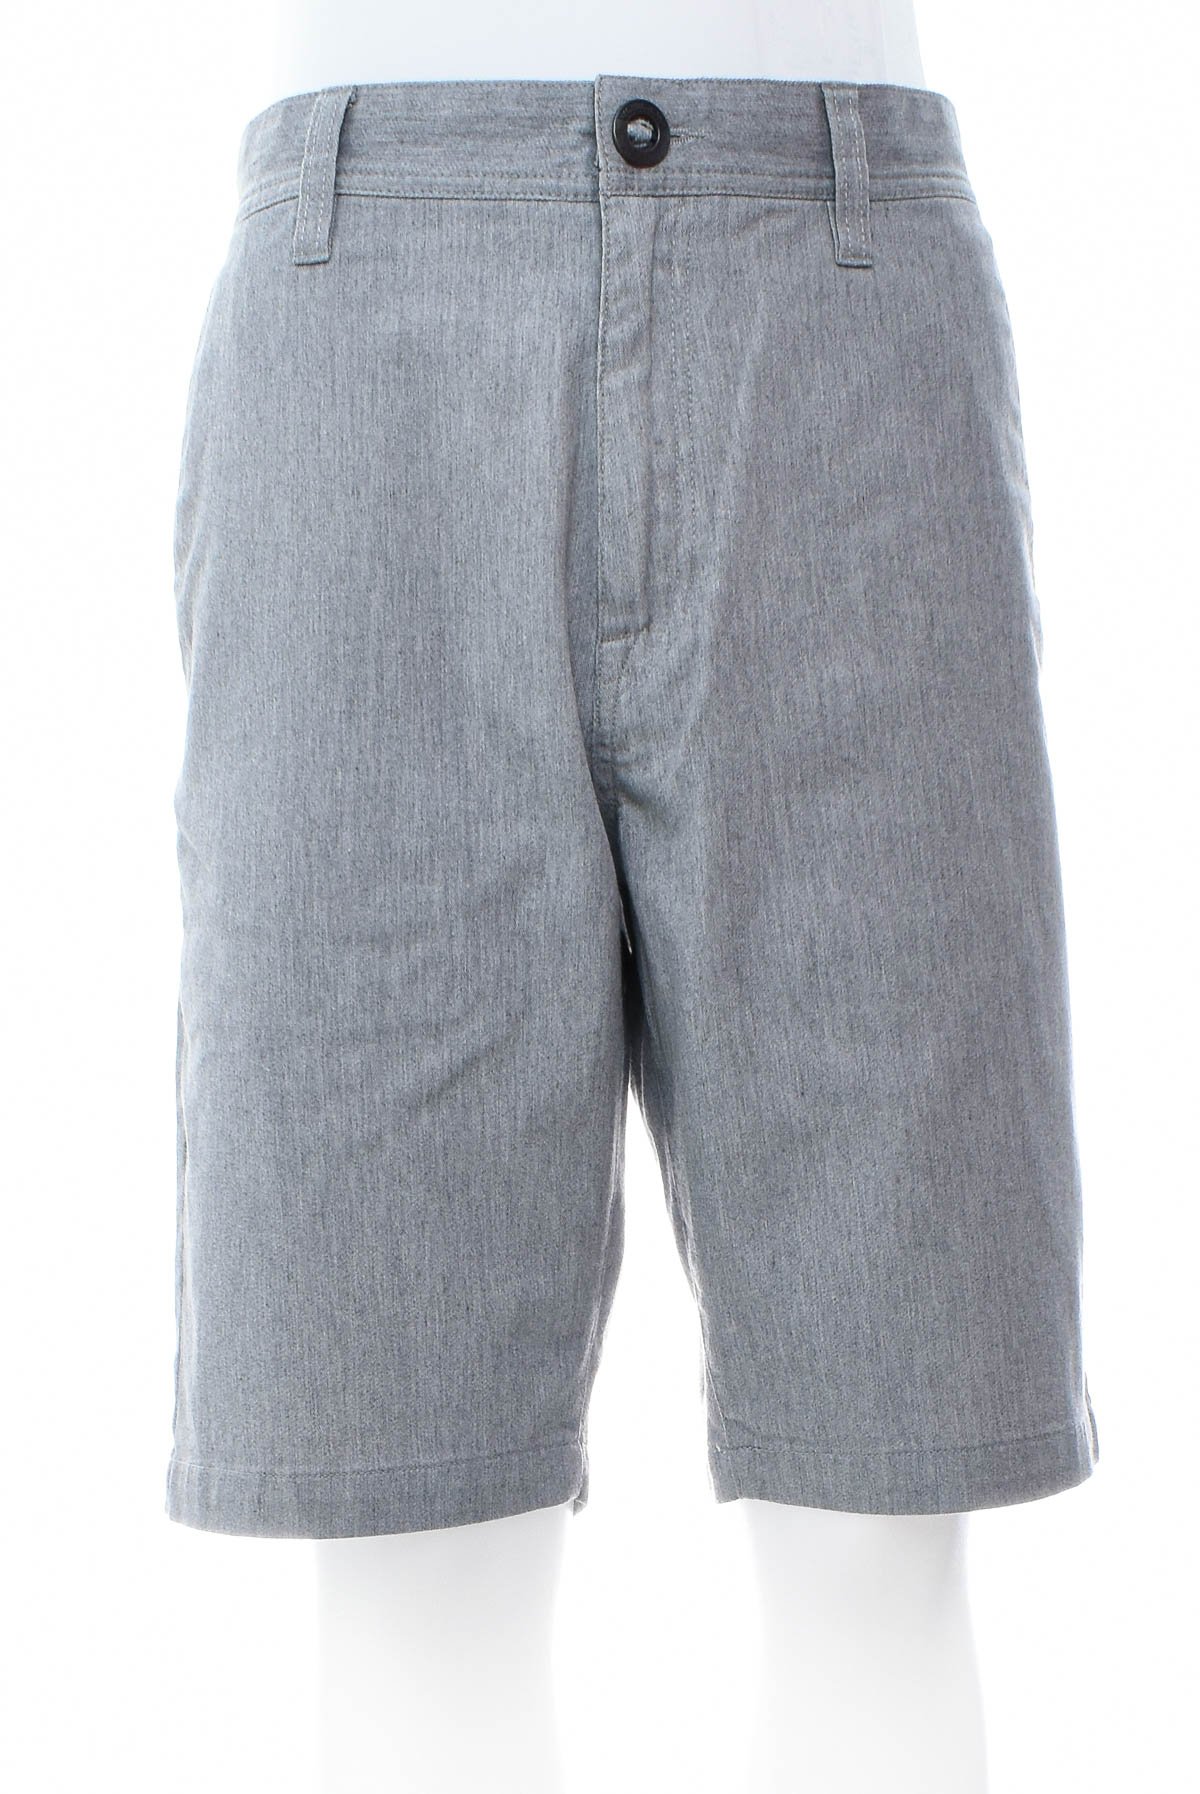 Men's shorts - Volcom - 0